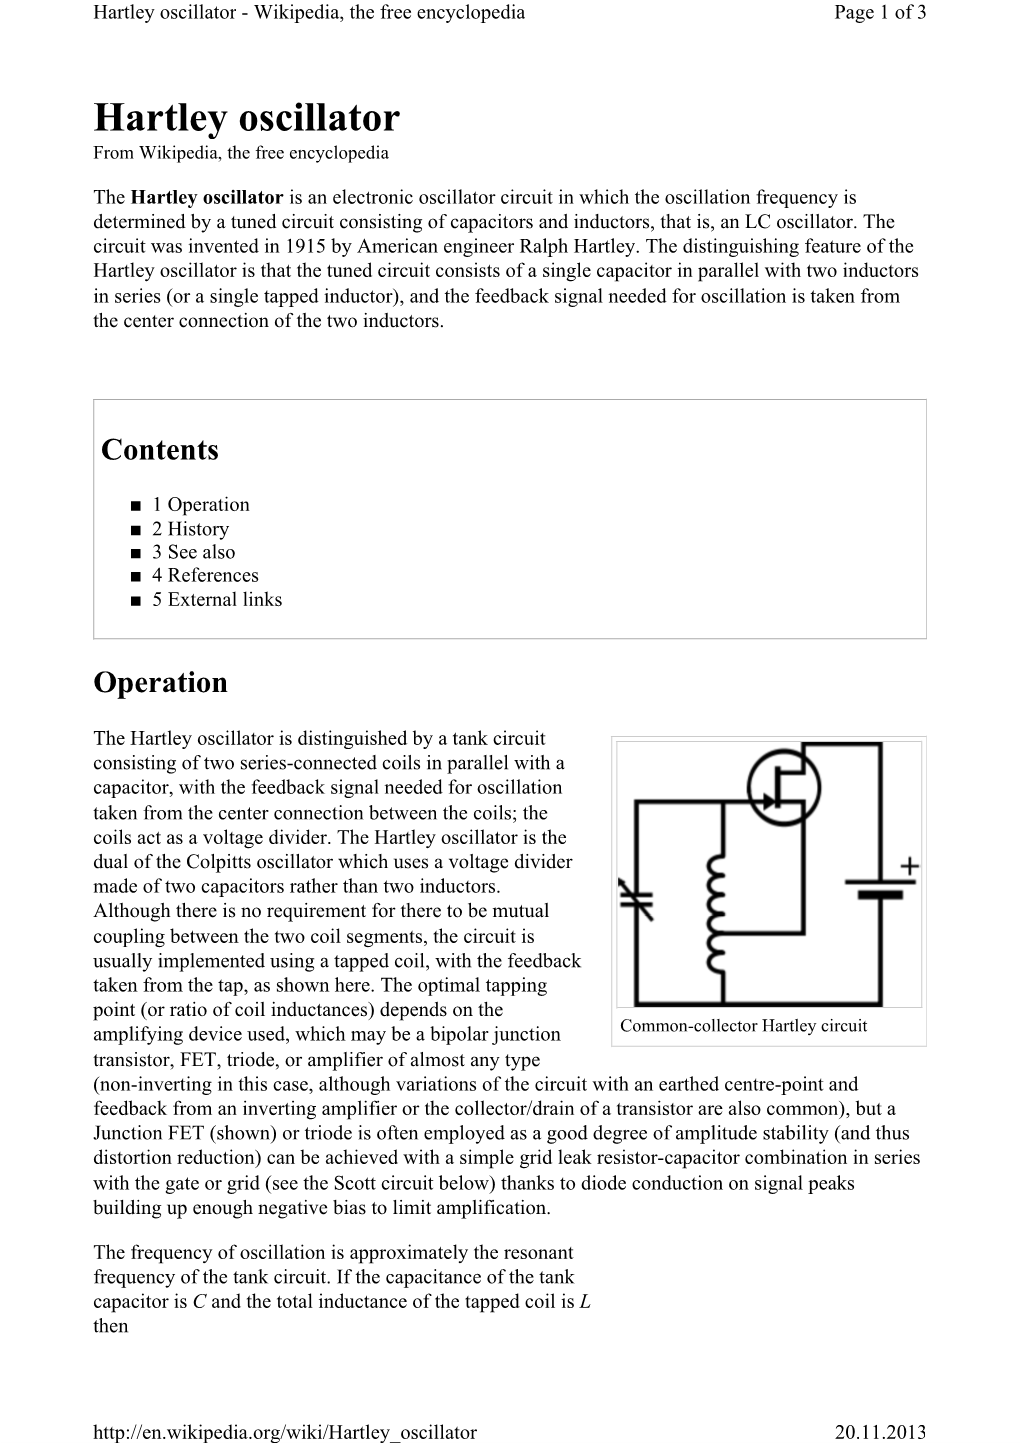 Hartley Oscillator - Wikipedia, the Free Encyclopedia Page 1 of 3